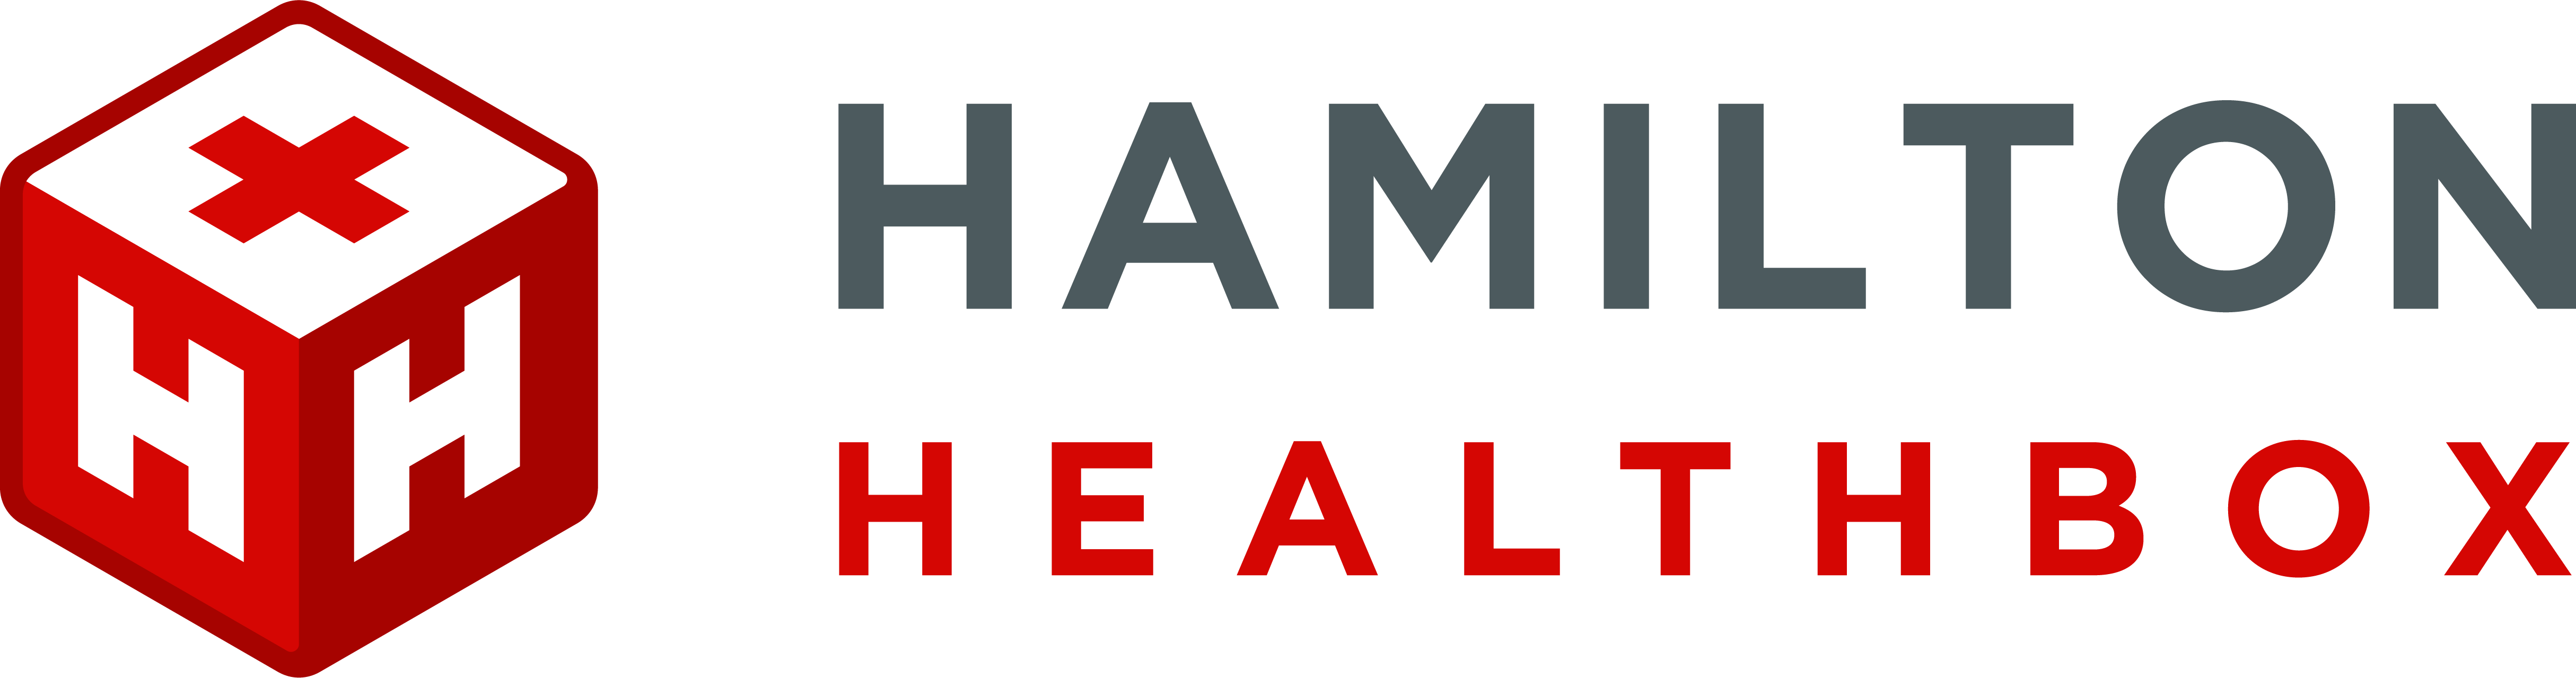 hamilton healthbox logo